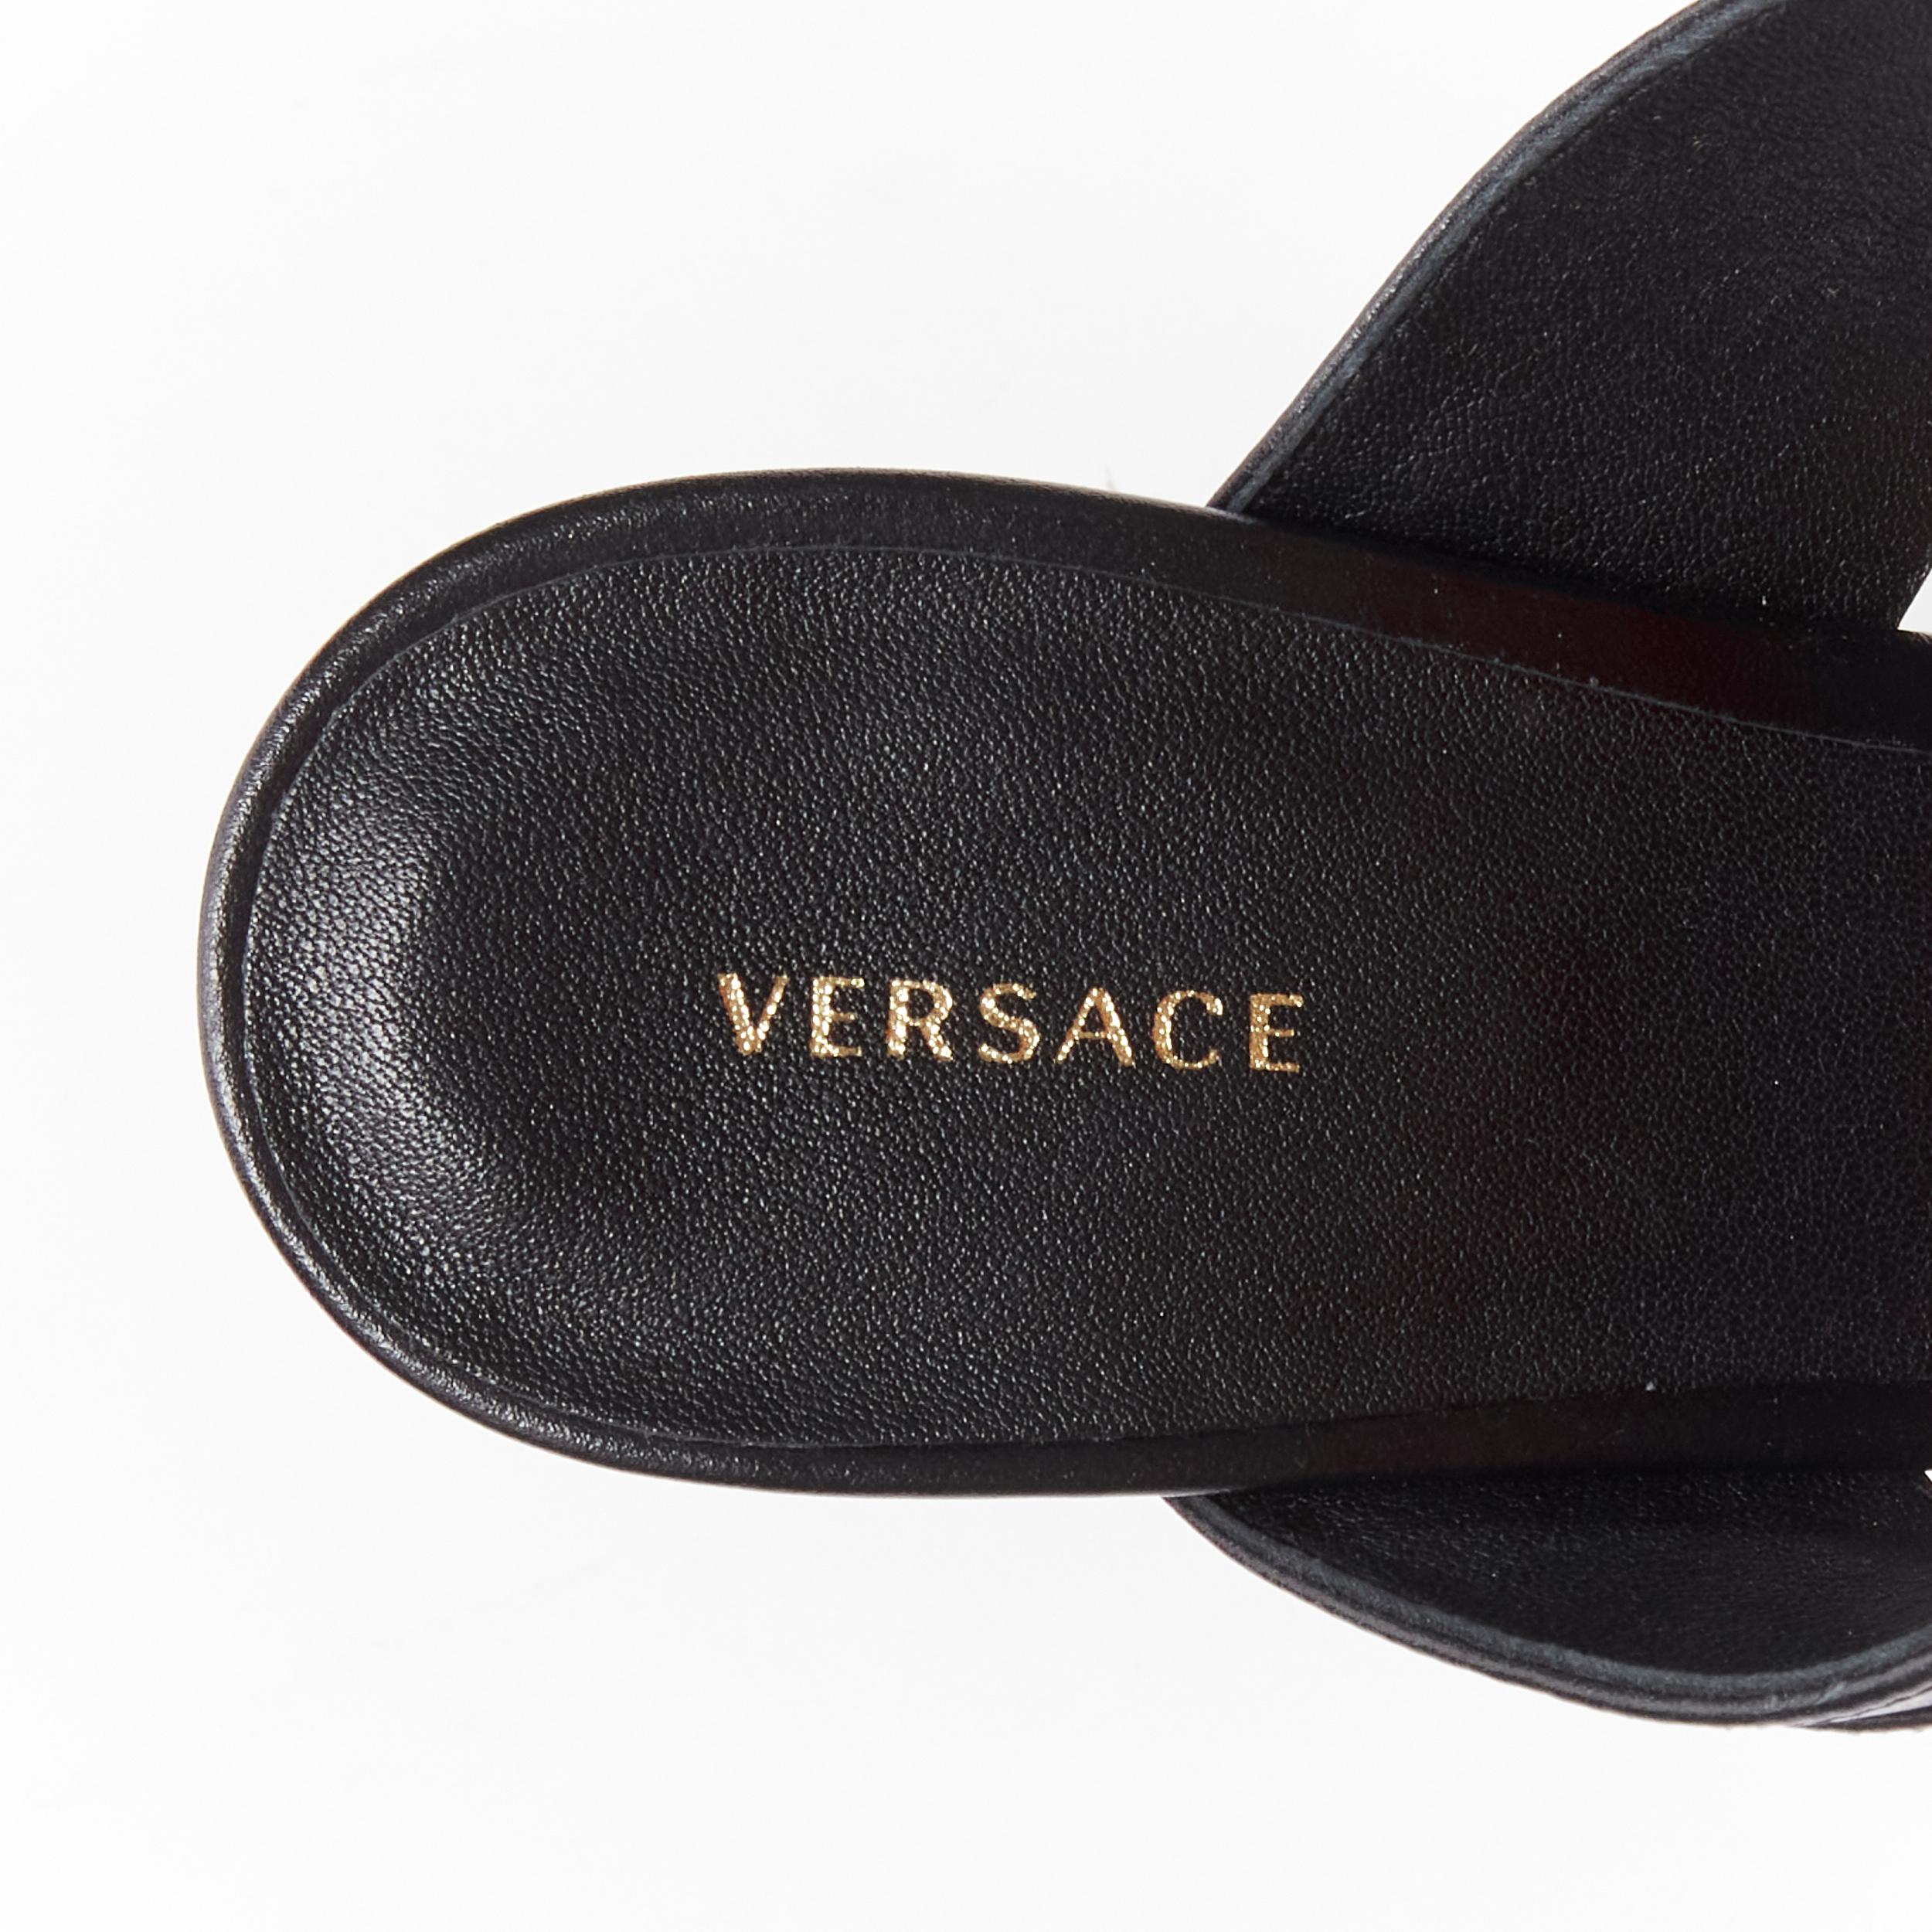 VERSACE Medusa Tribute gold buckle black leather high heel sandal EU36 5